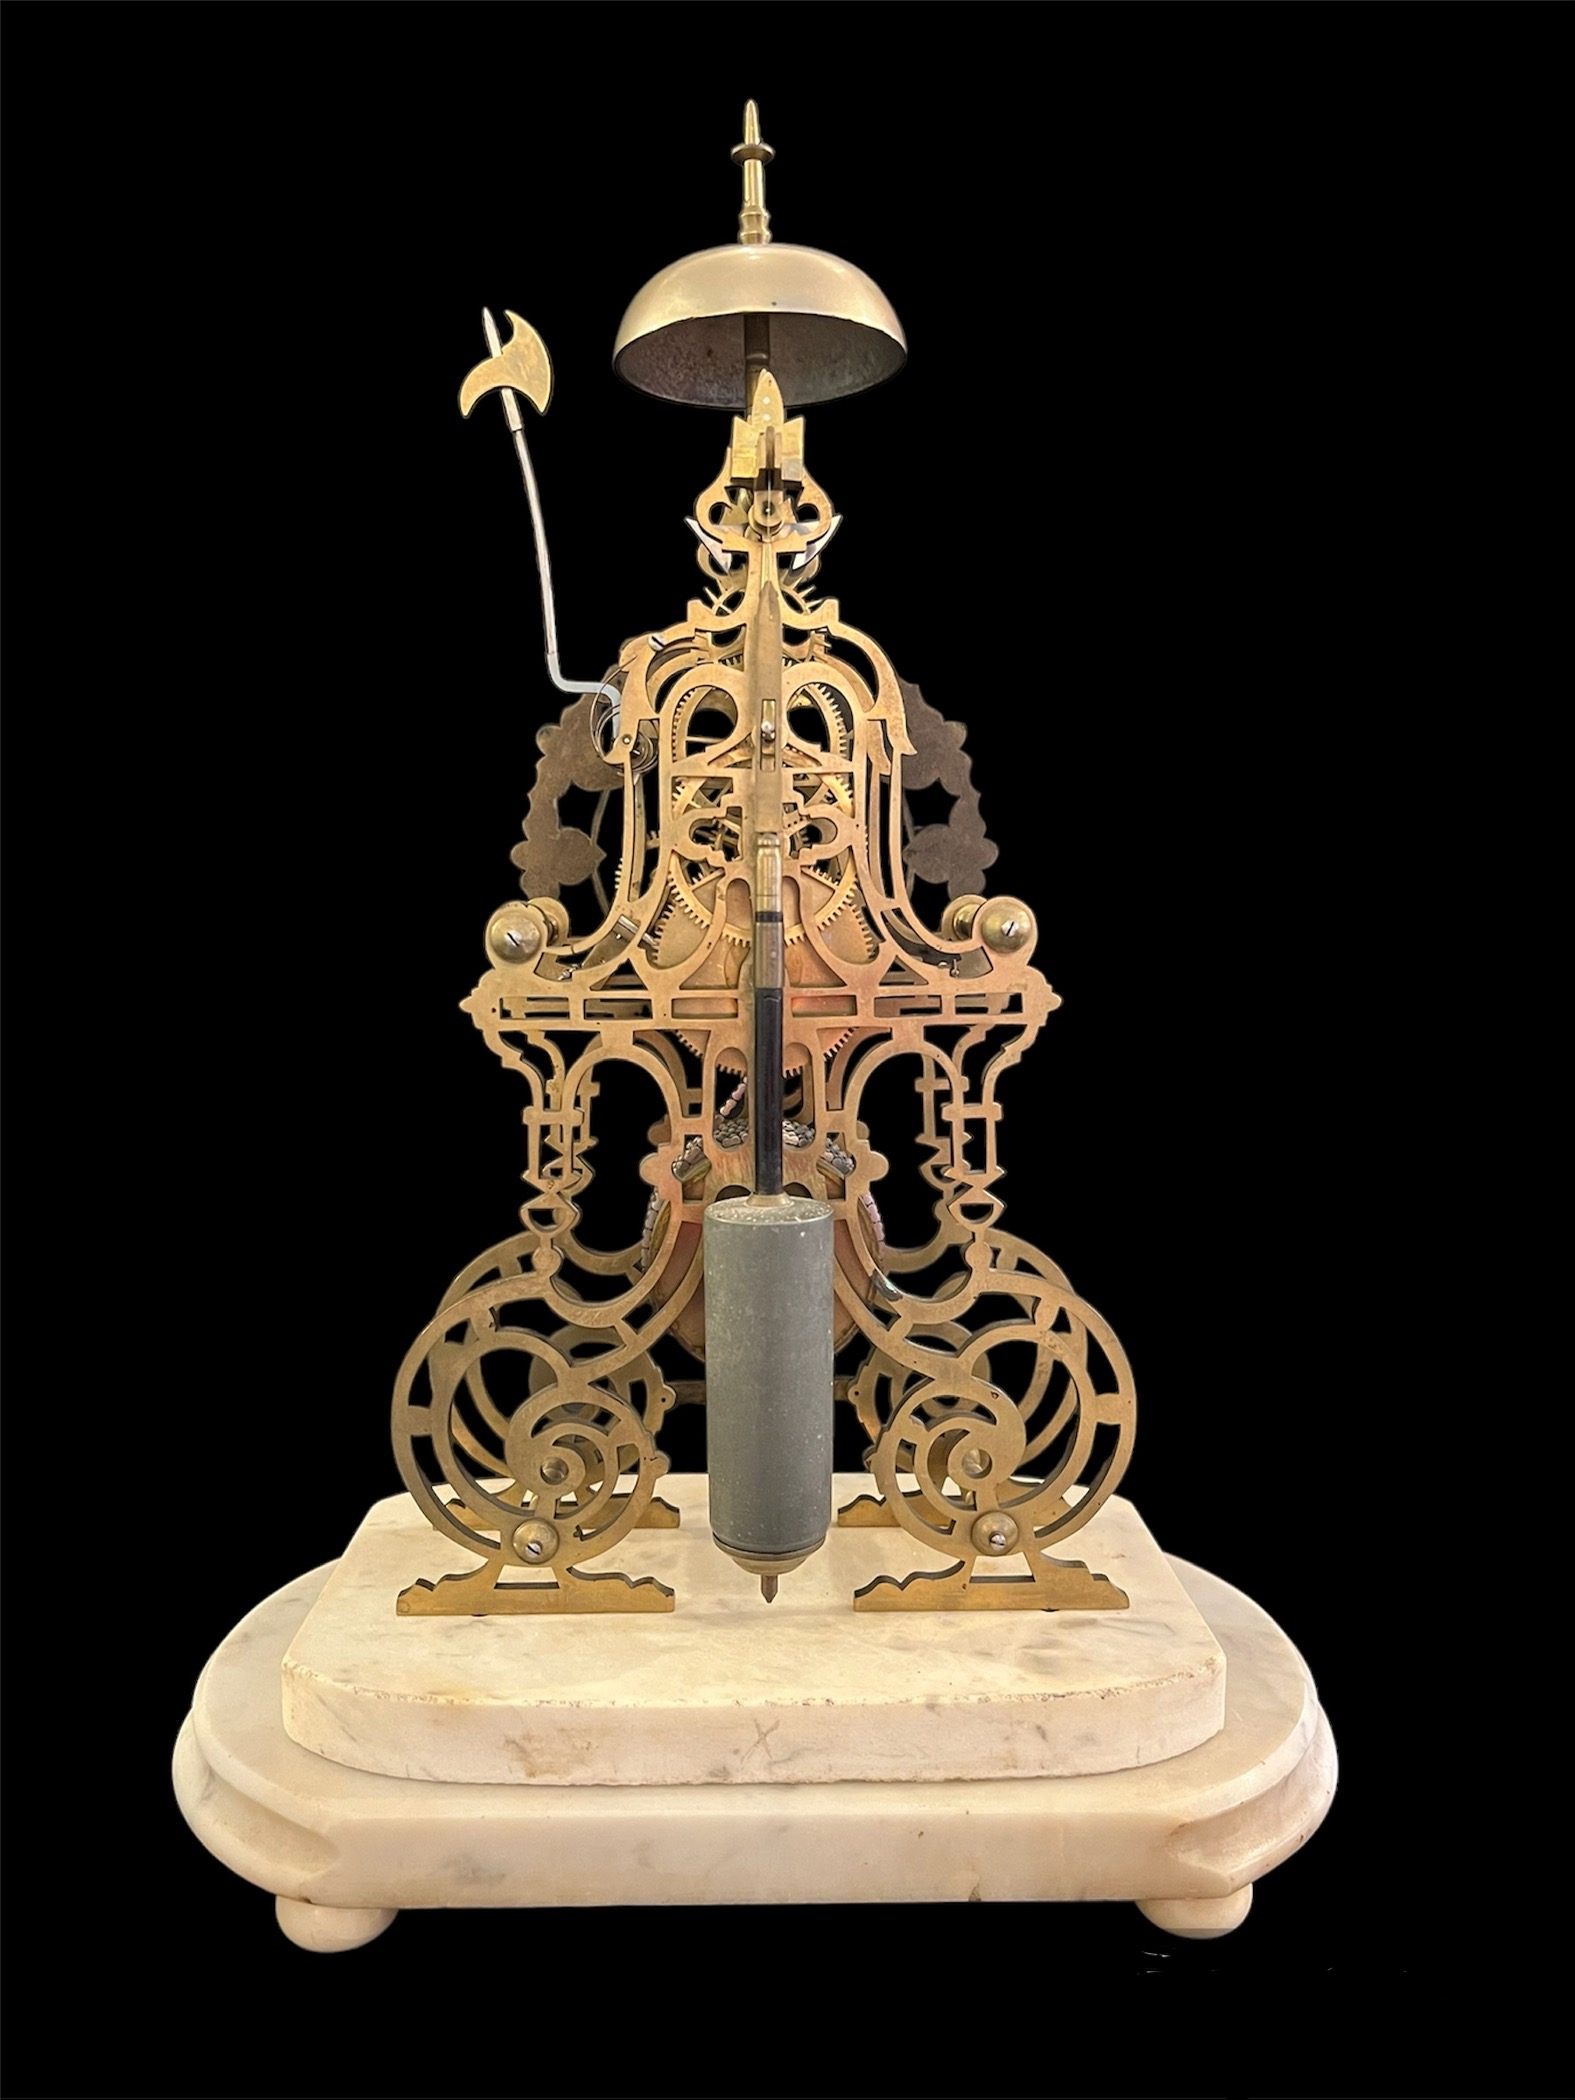 Antique Brass Skeleton Clock